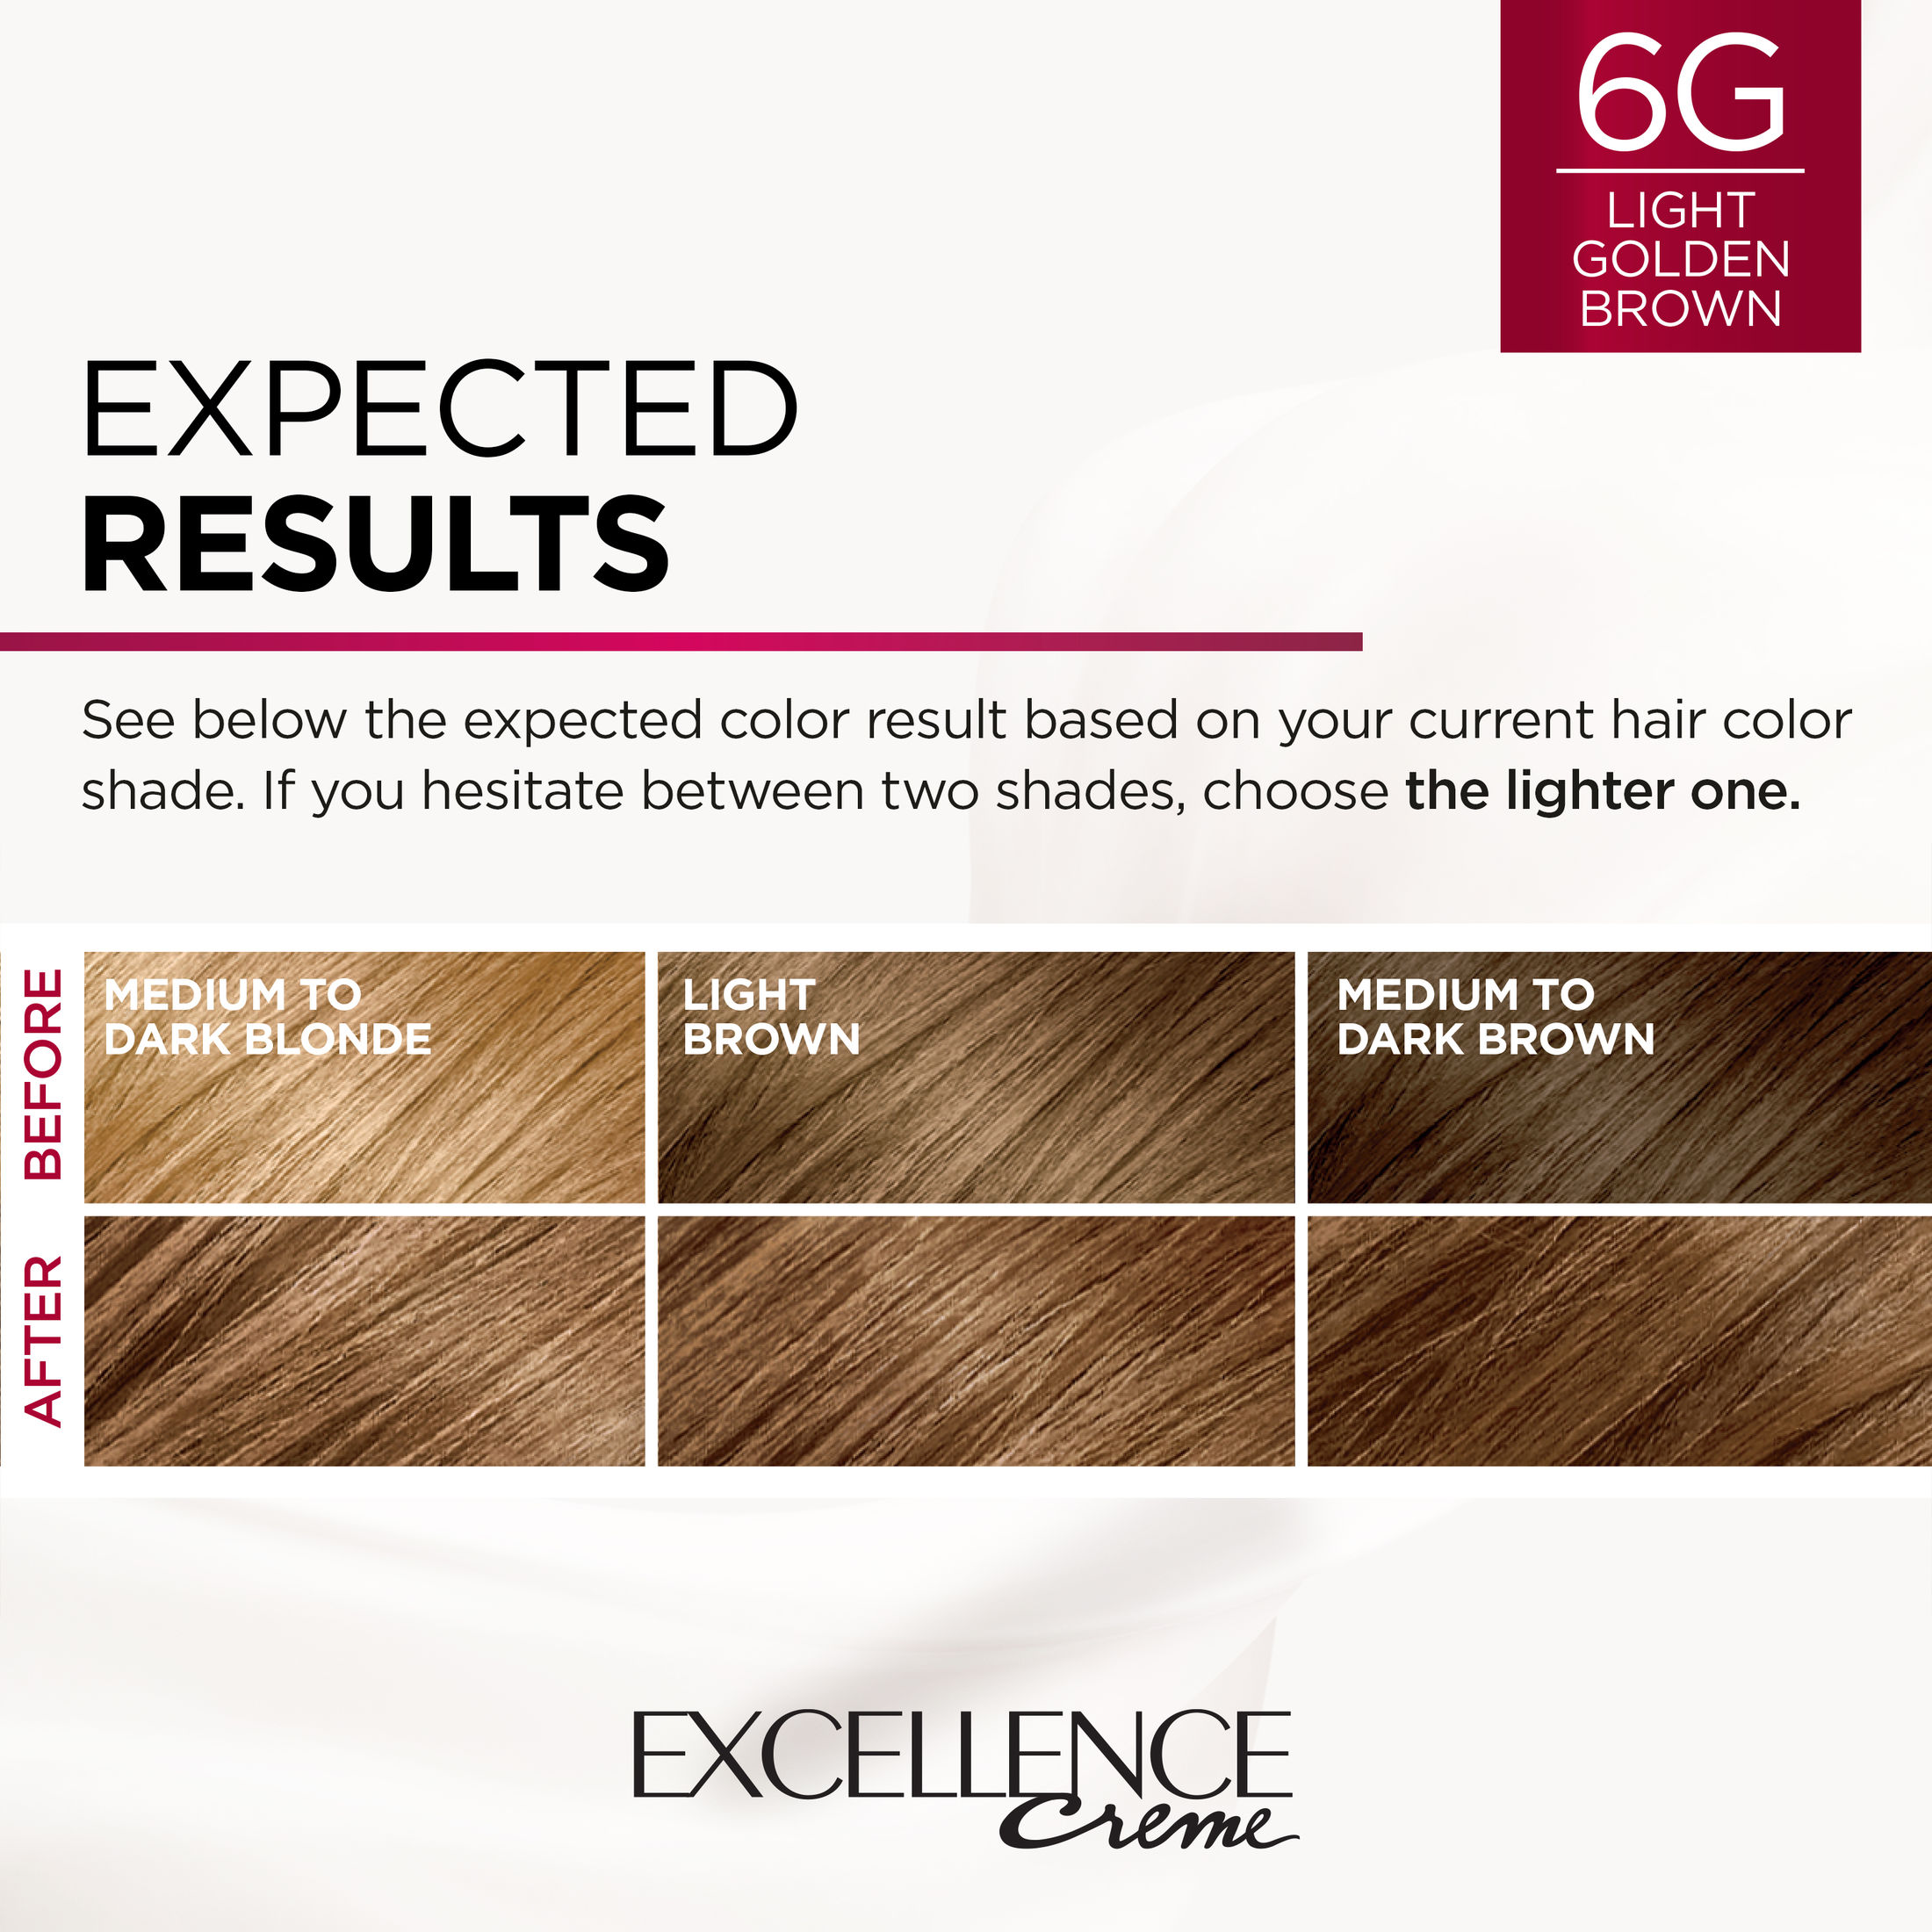 L'Oreal Paris Excellence Creme Permanent Hair Color, 6G Light Golden Brown - image 5 of 8